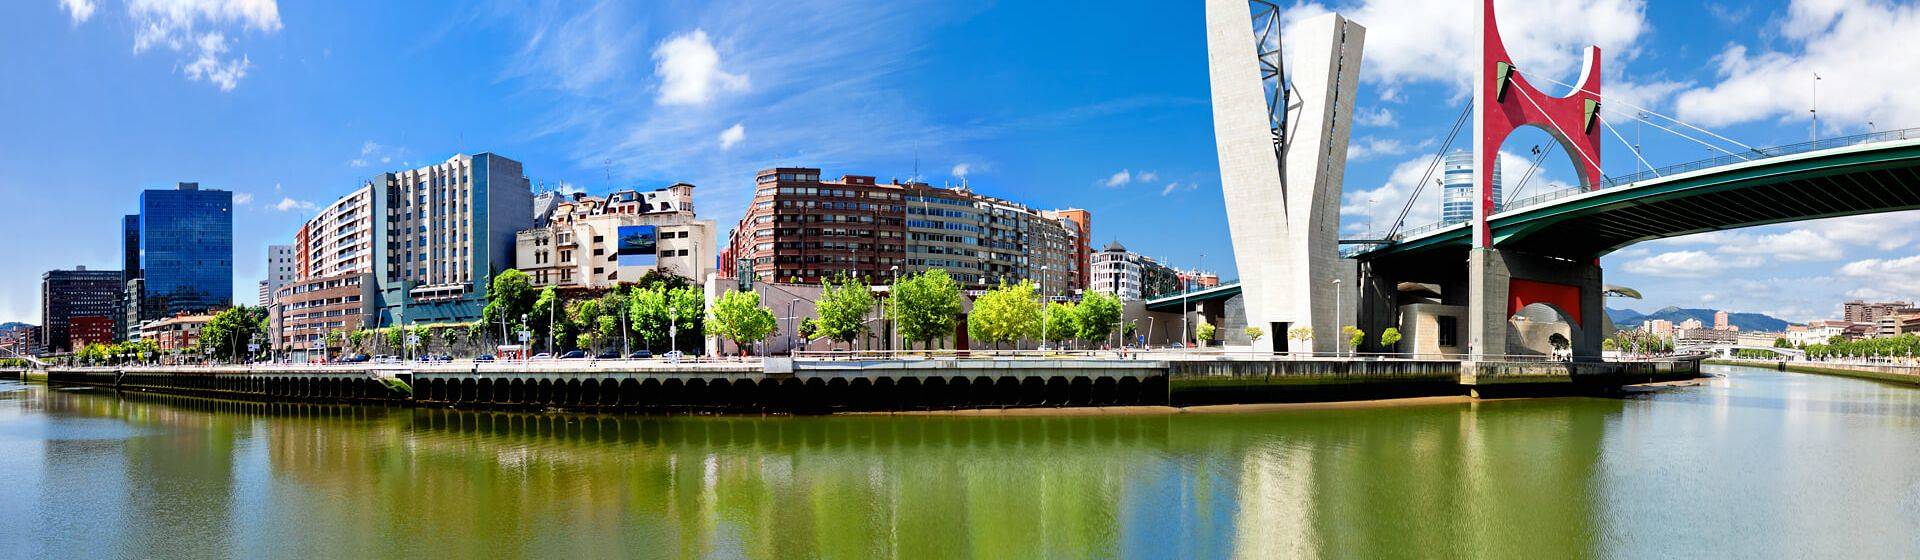 Holidays to Bilbao Image